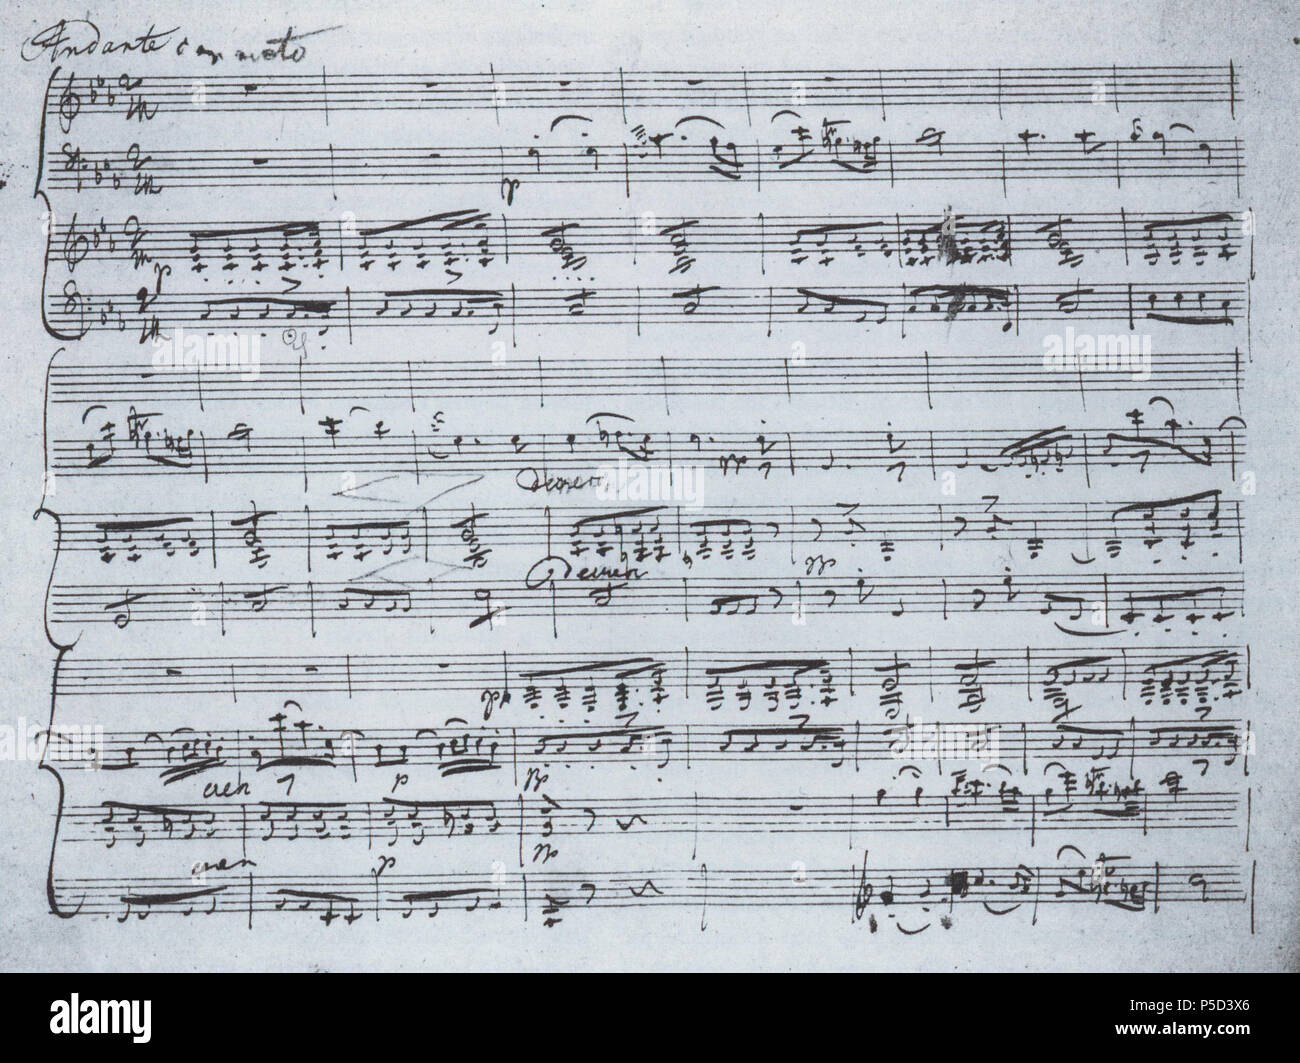 N/A. Inglese: Schubert's op. 100 . 6 novembre 2011. Schubert Facsimile W. Dahms, 1913 524 Es-Dur-Trio Schubert Foto Stock